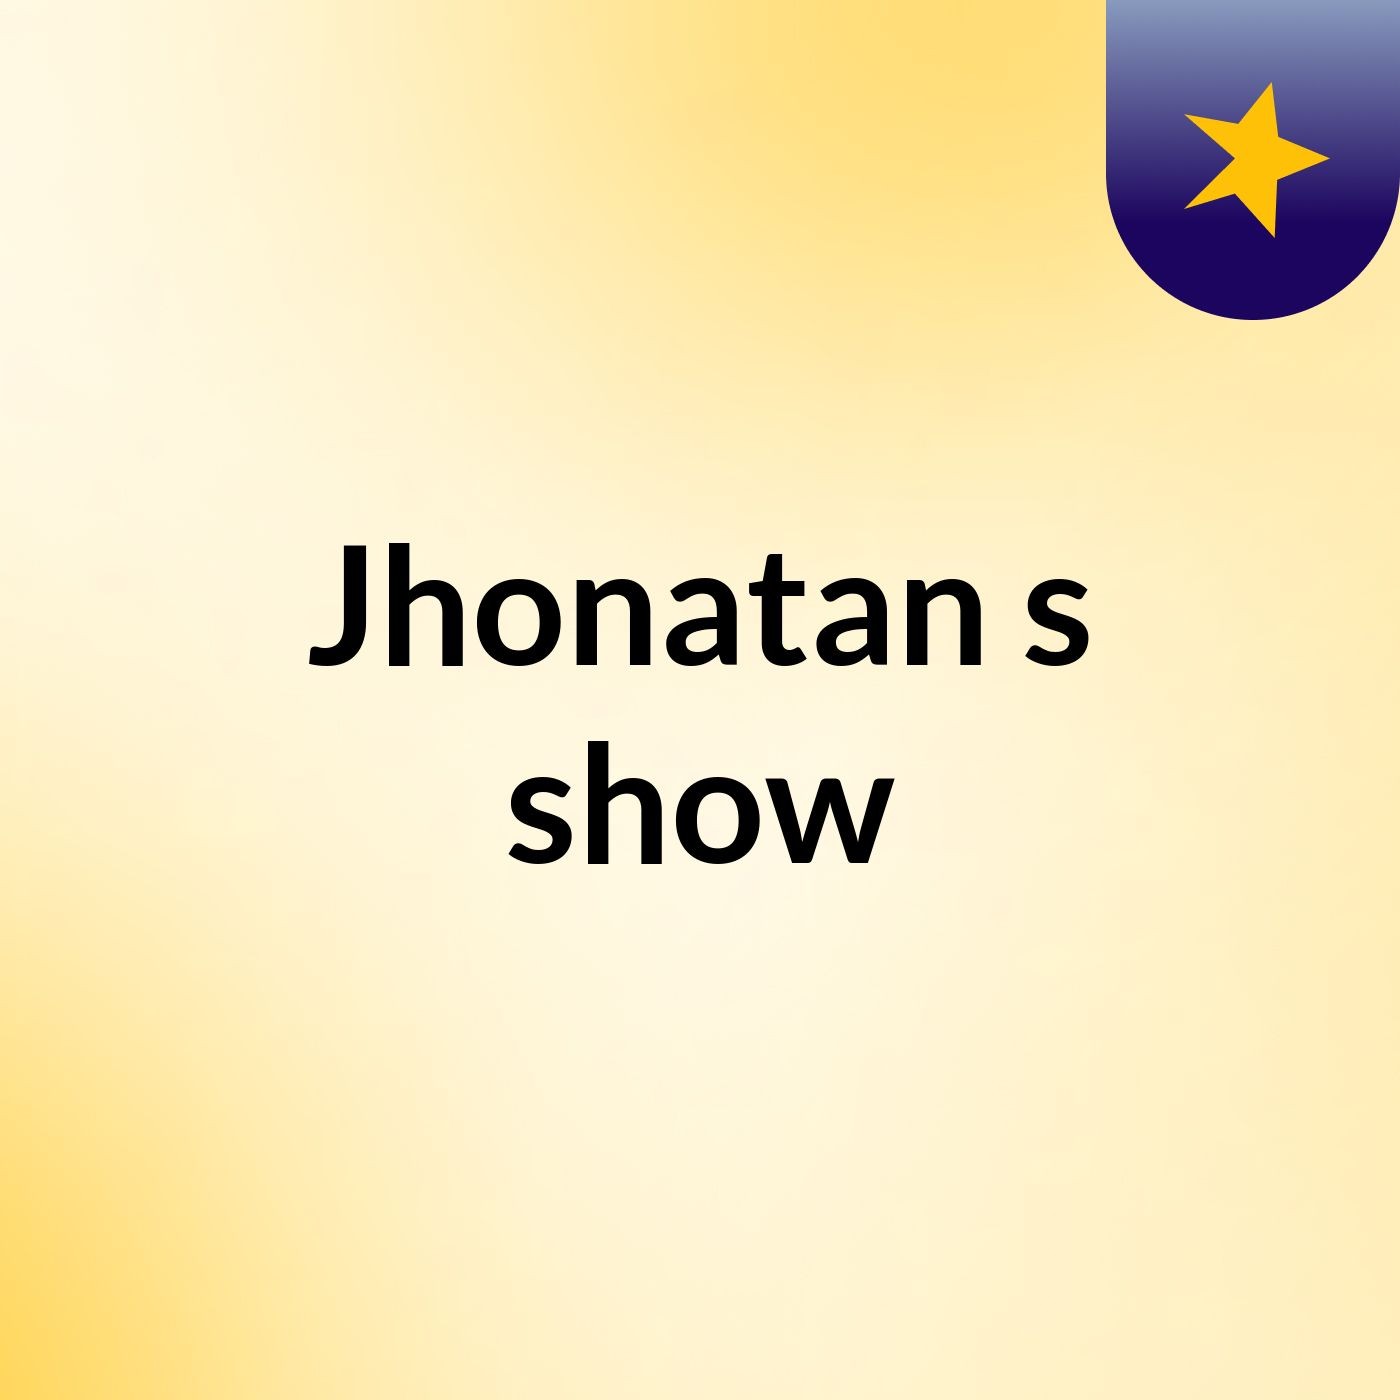 Jhonatan's show